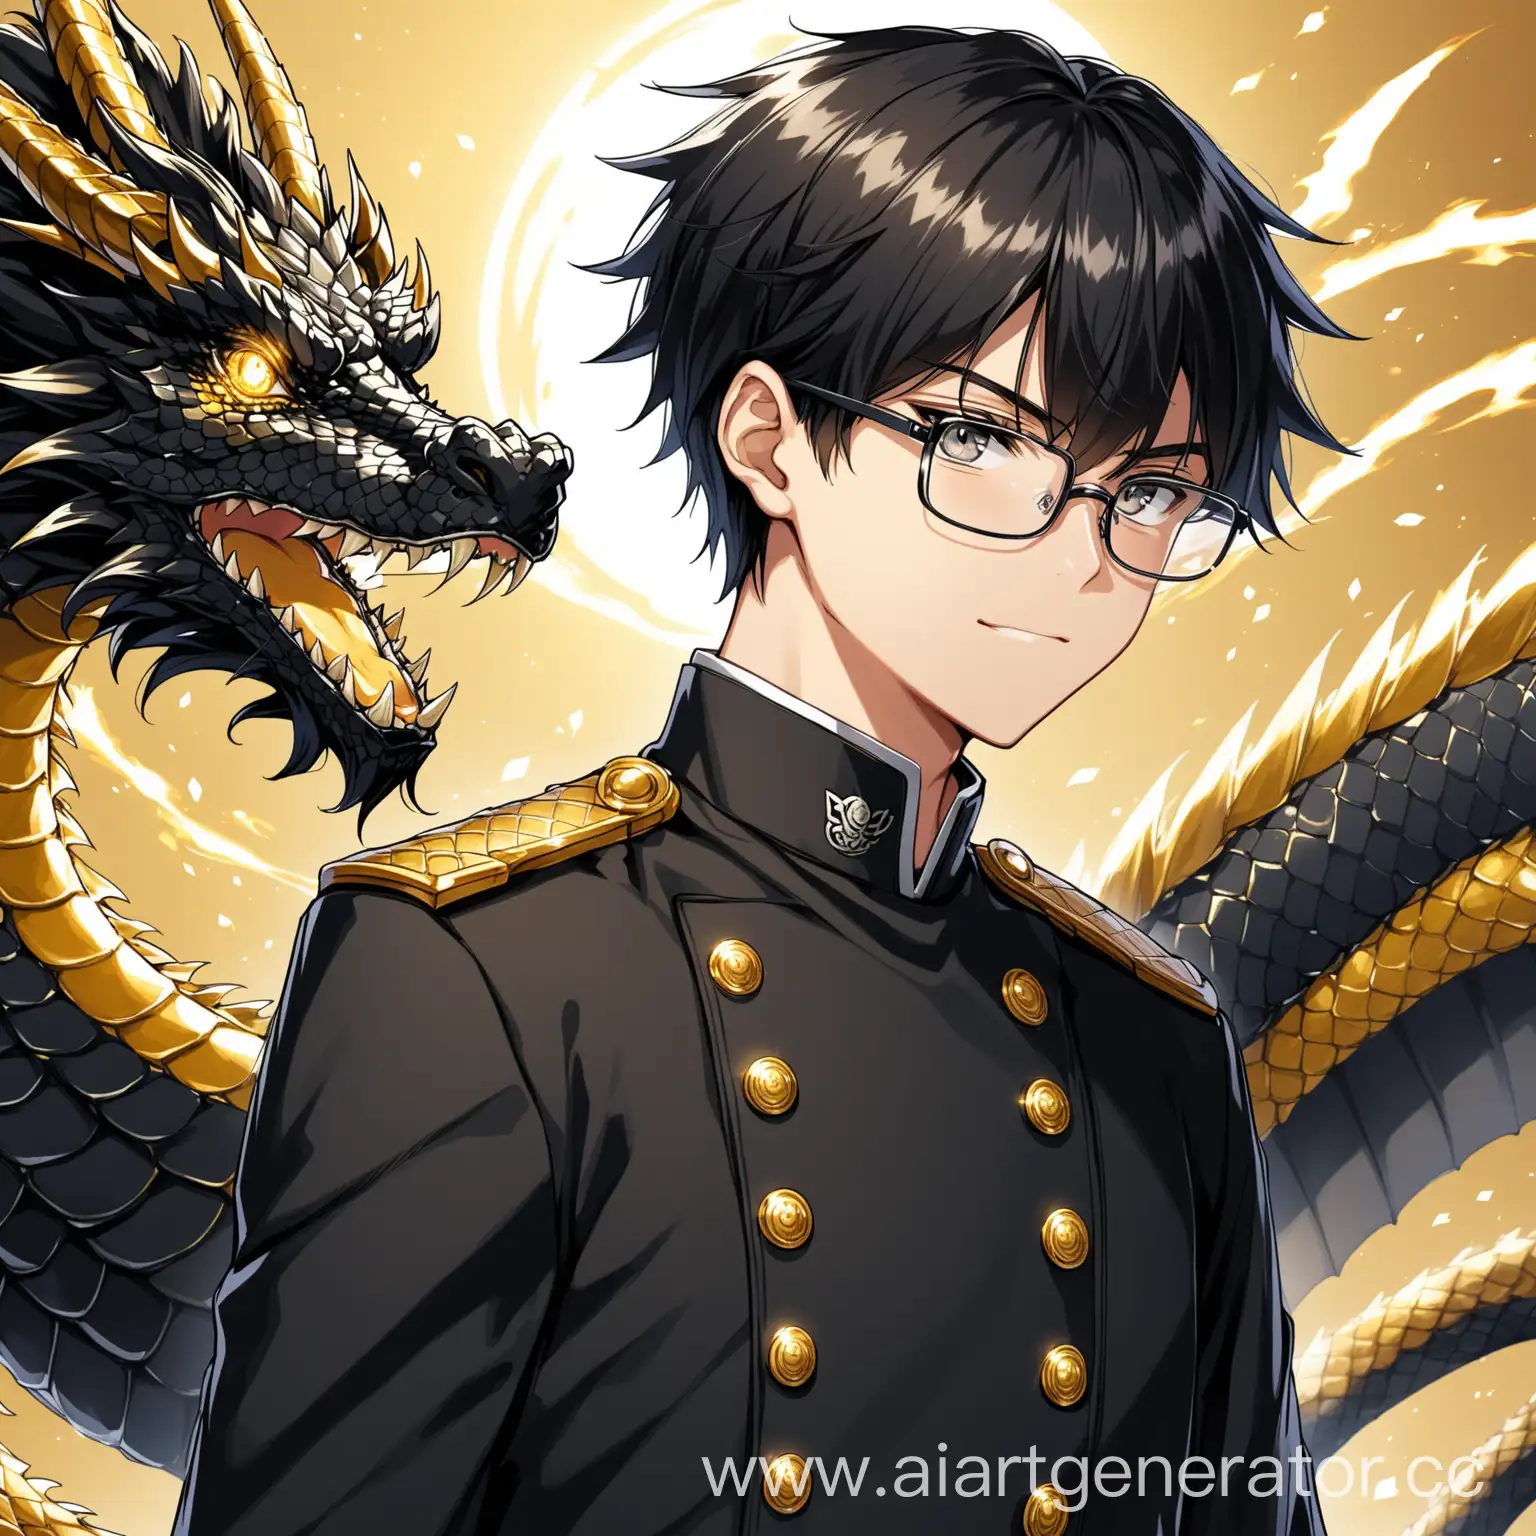 Teenage-Boy-in-Black-Uniform-with-Black-and-Gold-Dragon